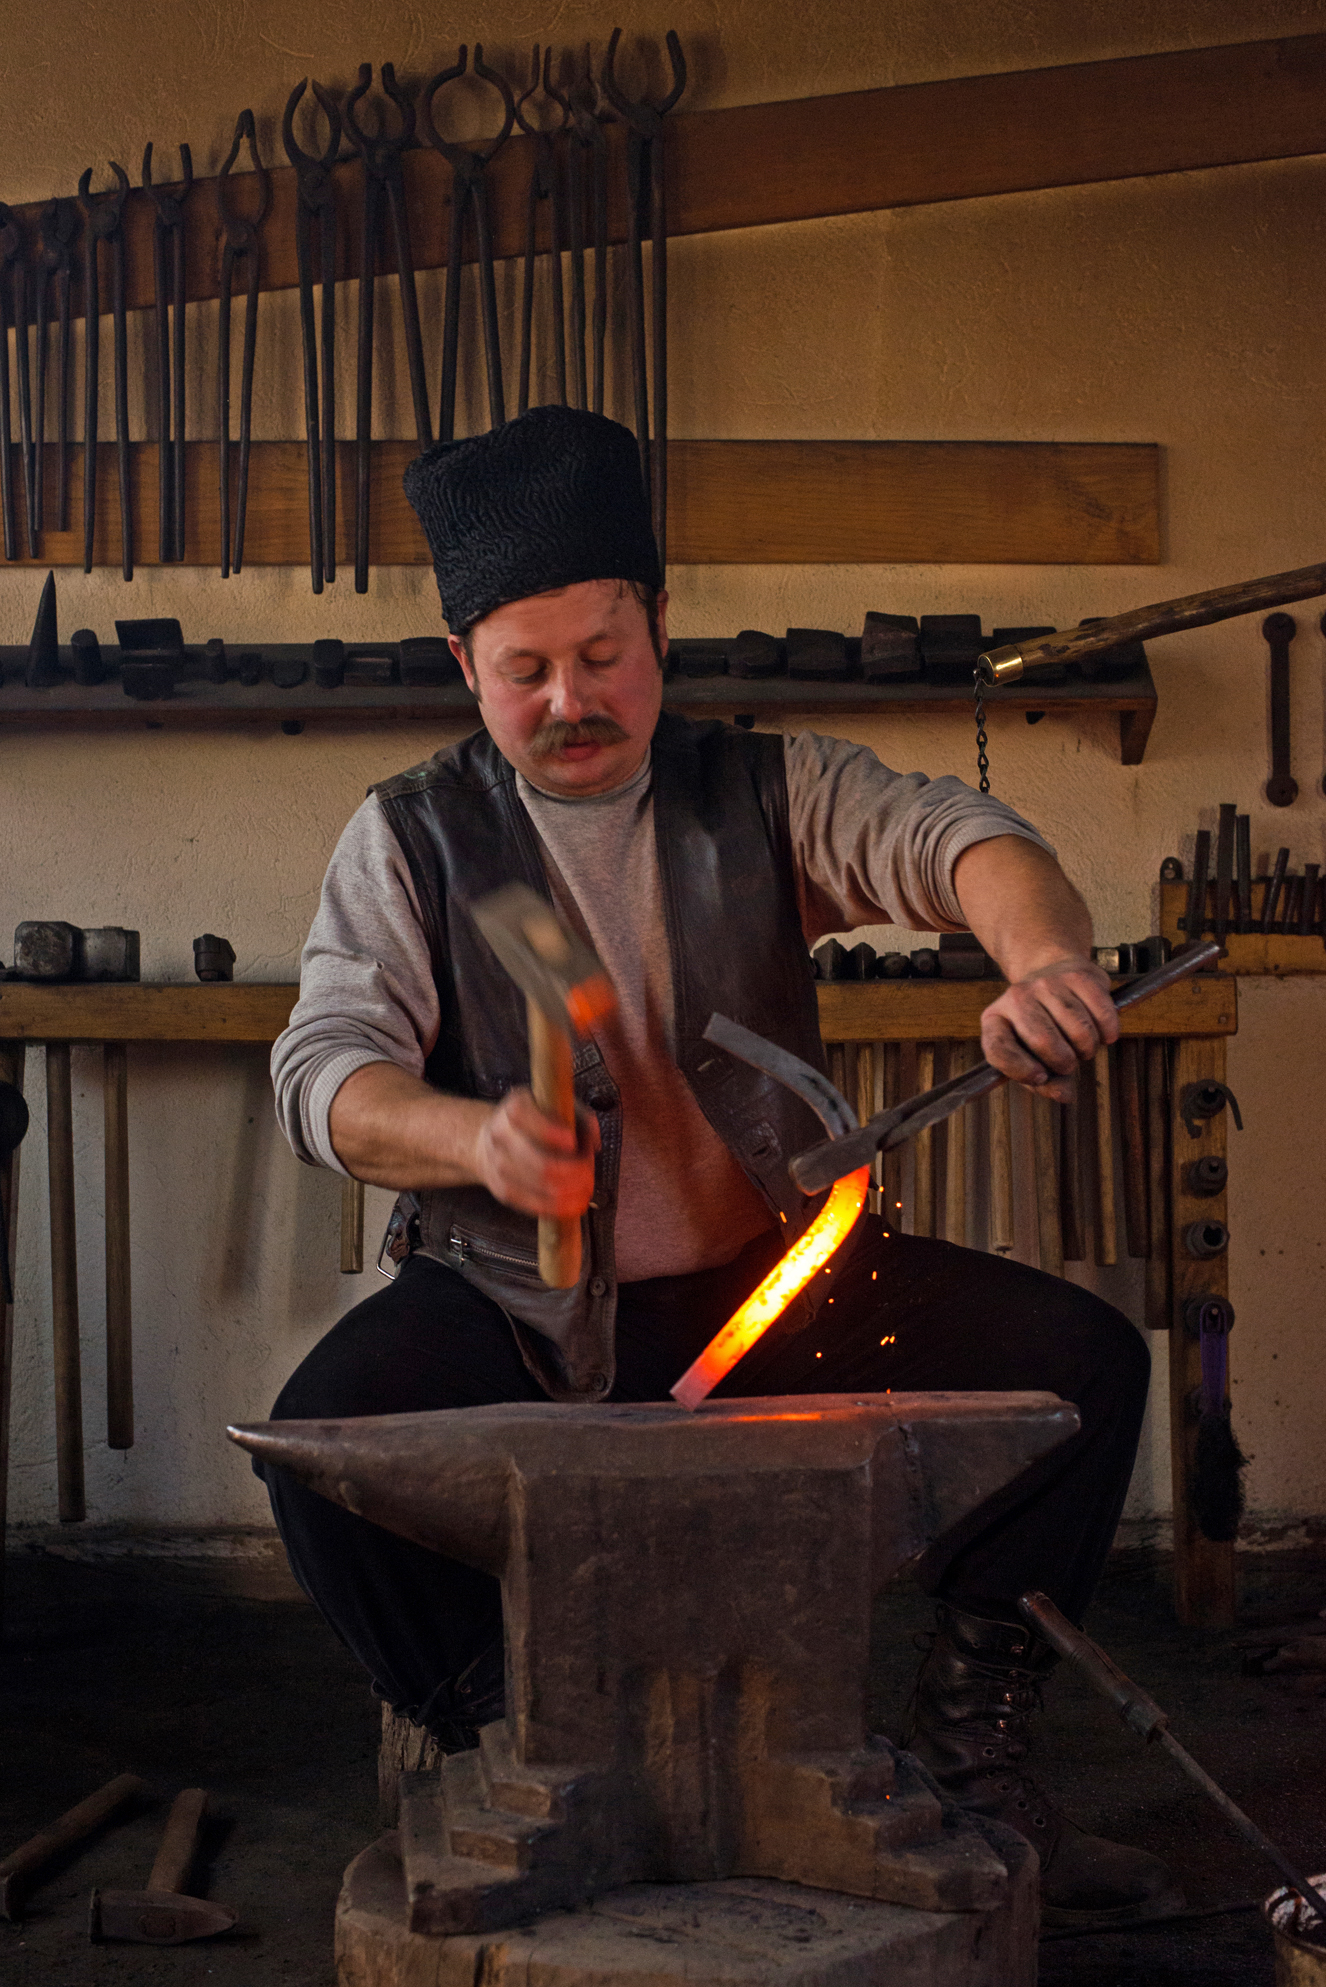 Făurarul satului - Cigánykovács - The blacksmith